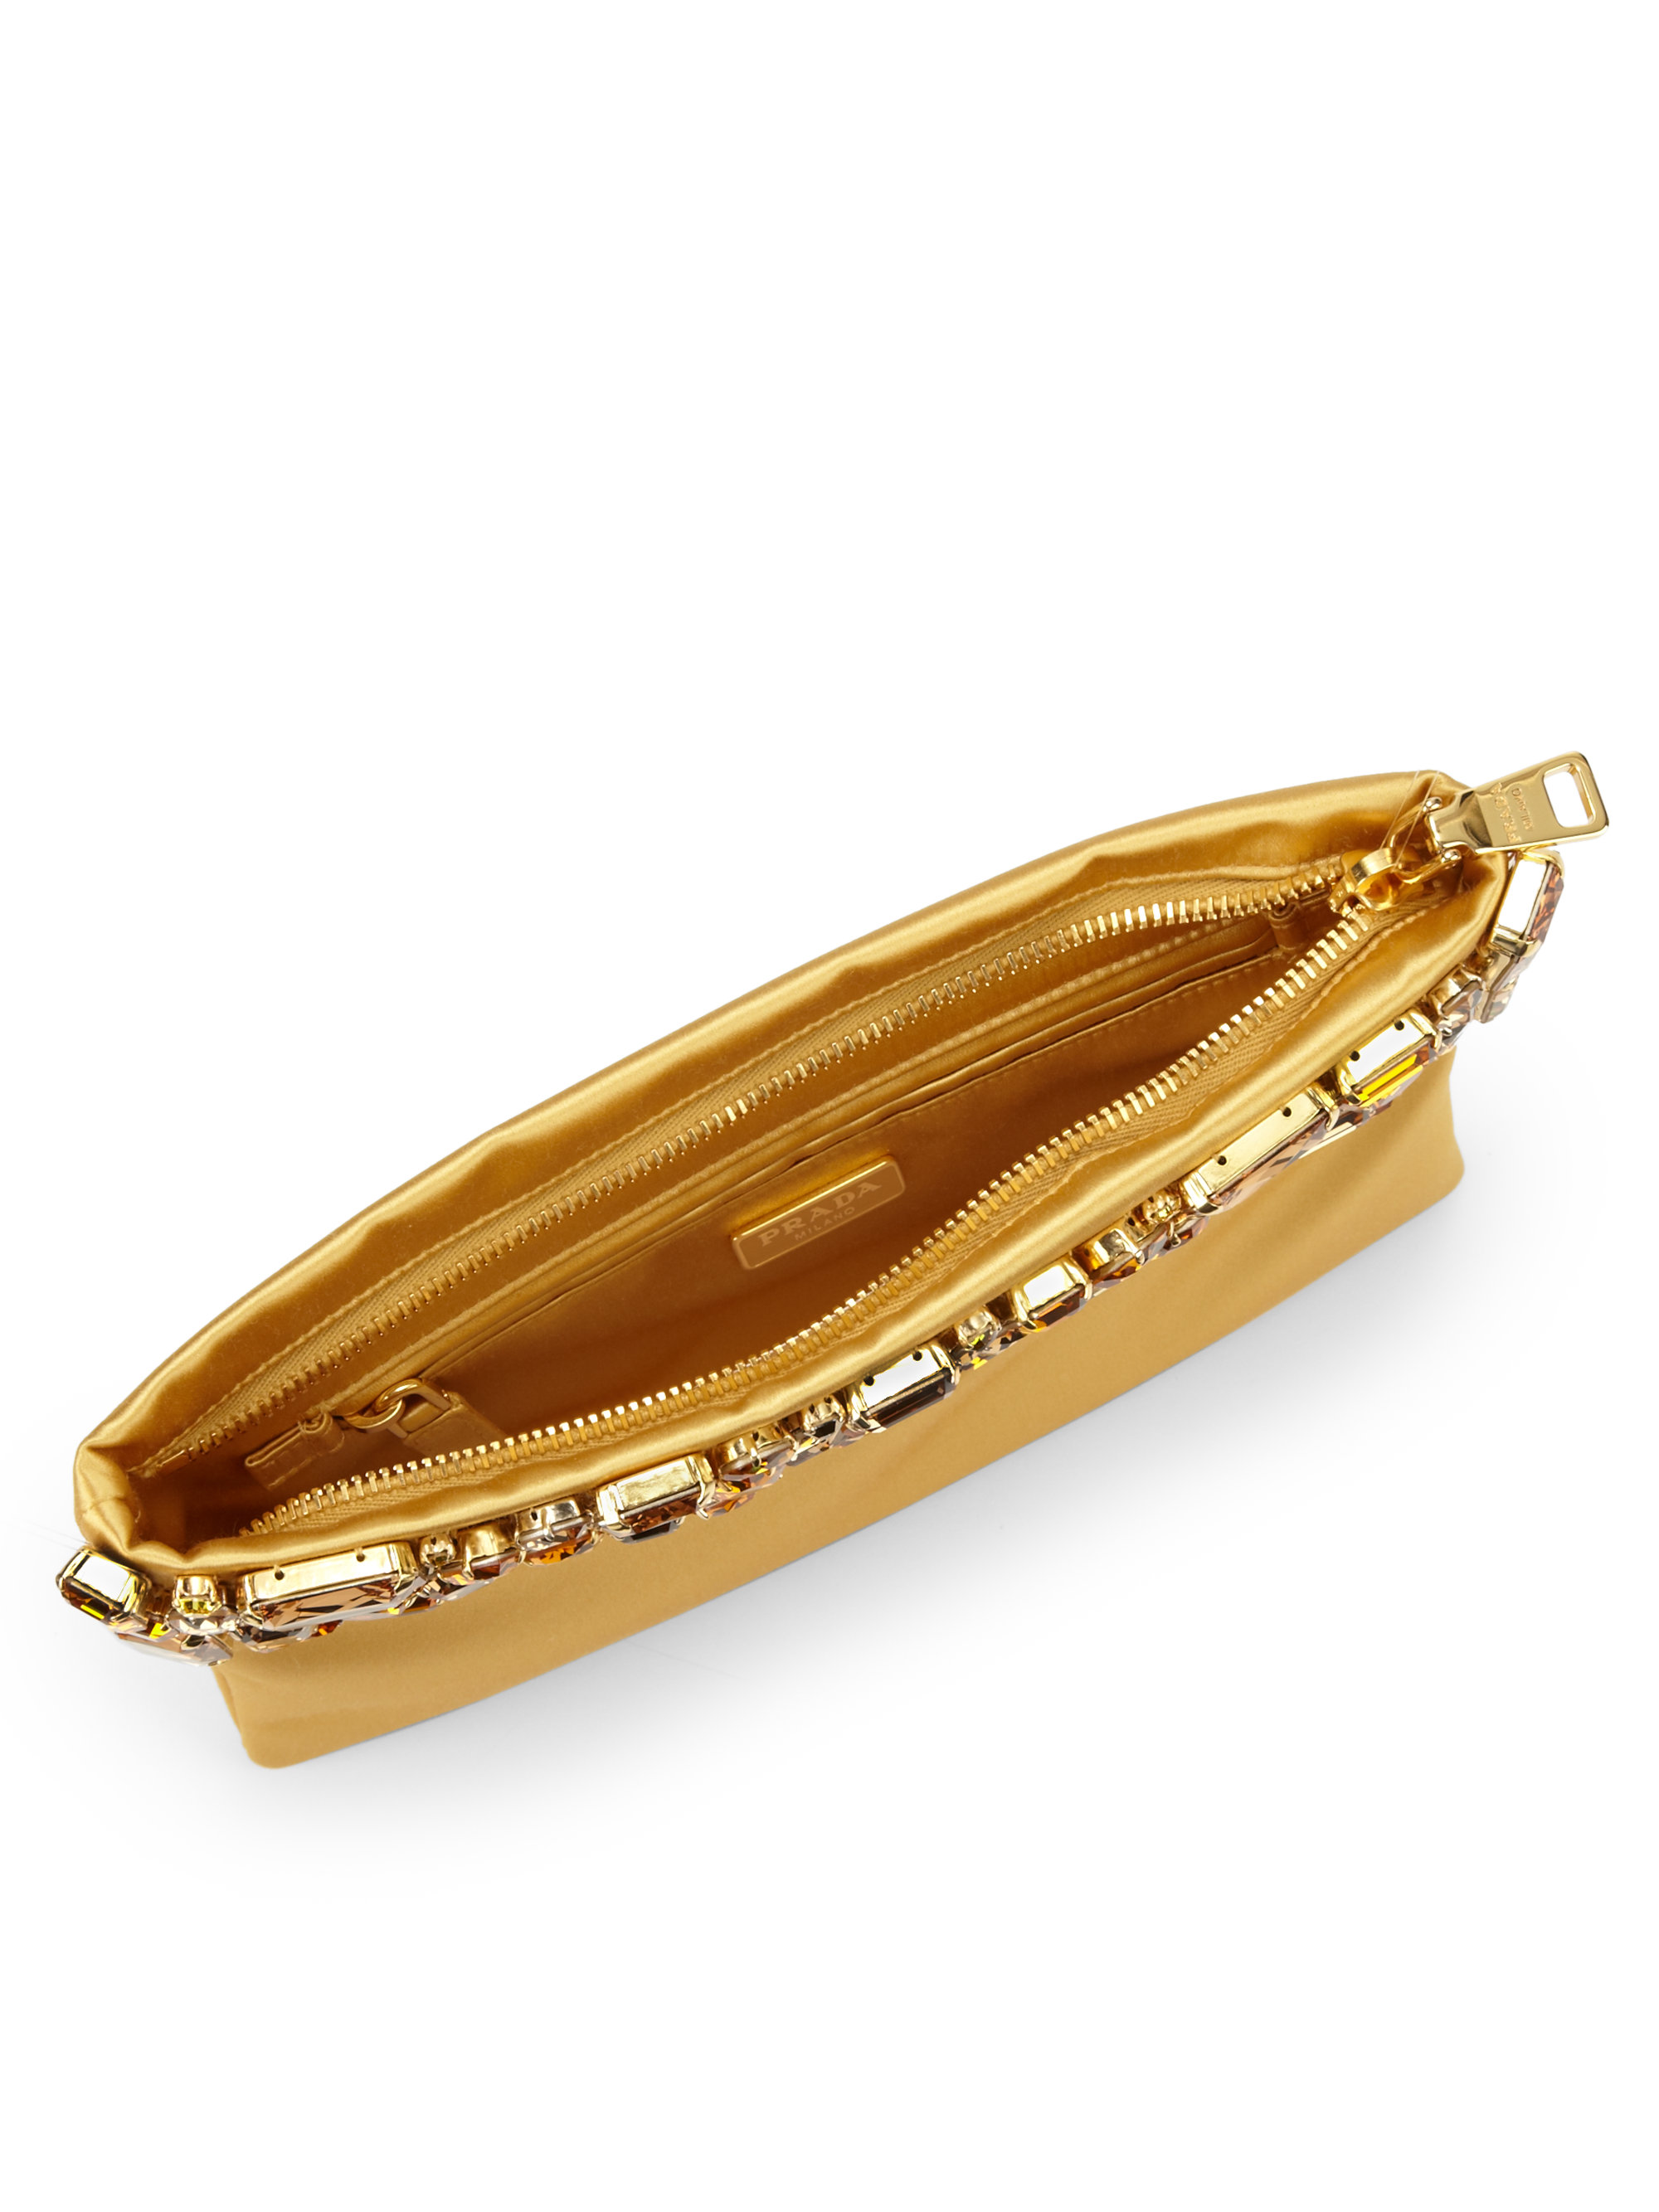 Prada Raso Jeweled Satin Clutch in Gold (GINESTRA-GOLD) | Lyst  